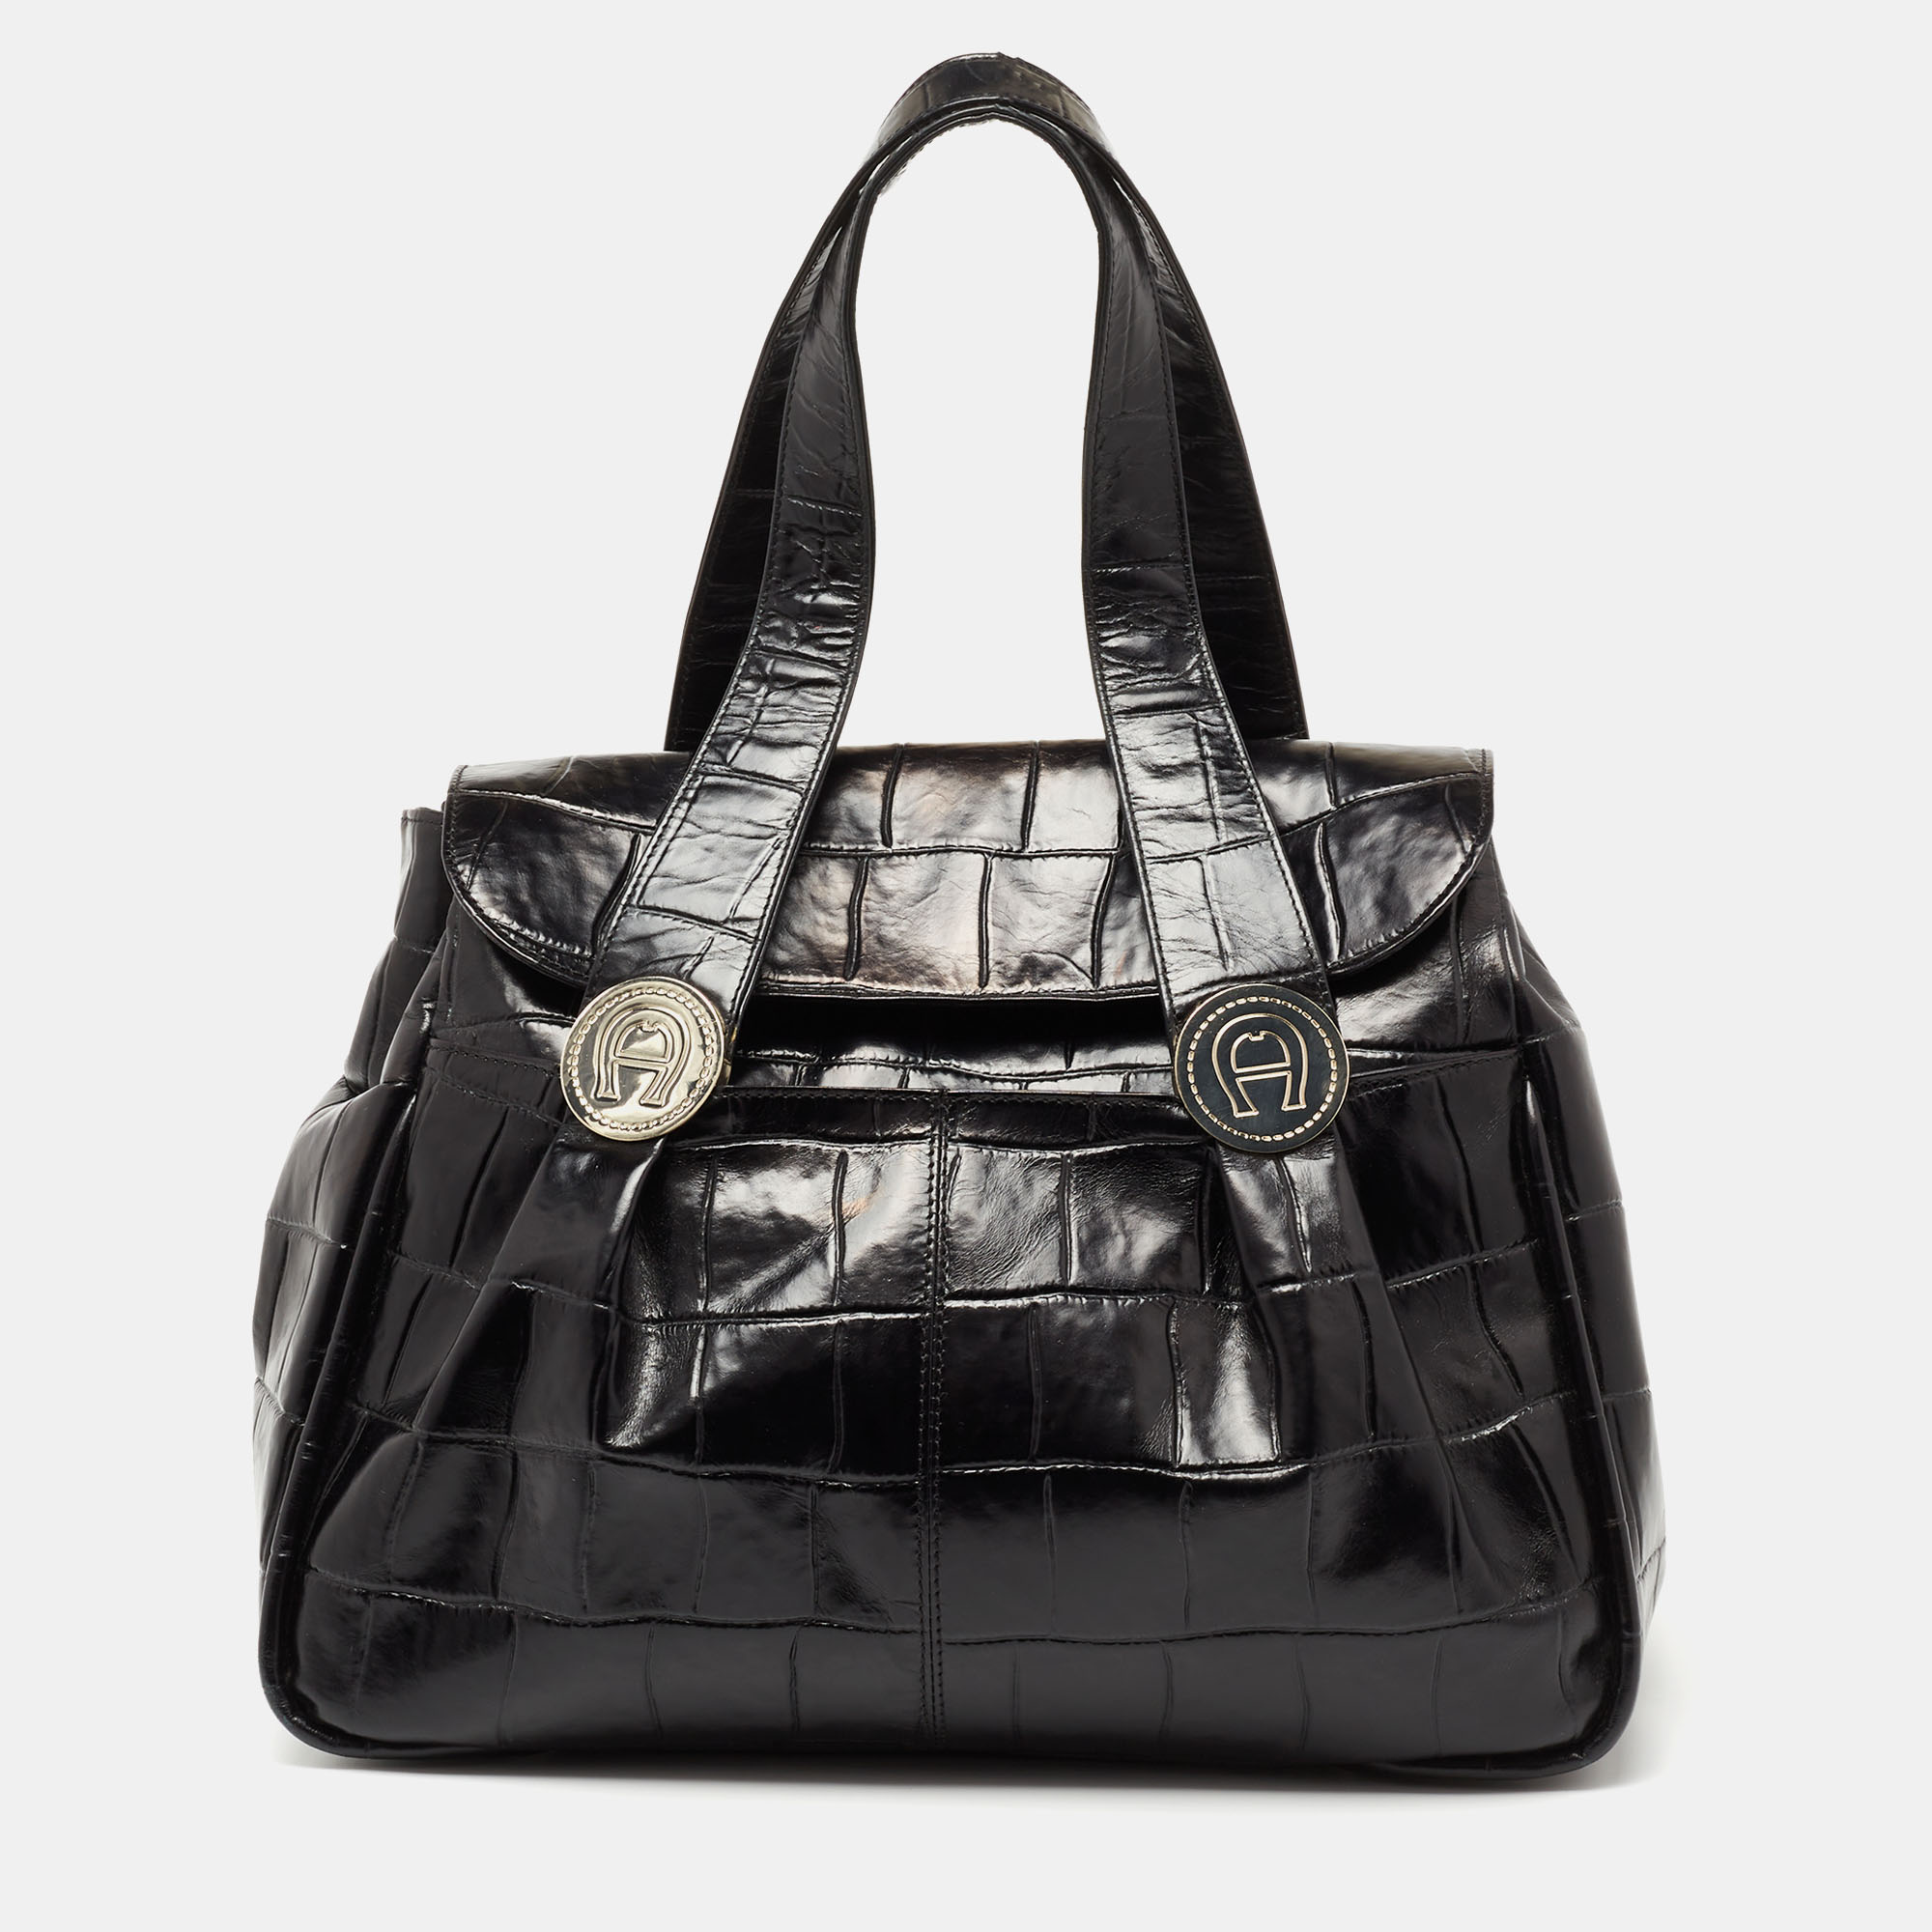 Aigner black croc embossed leather satchel